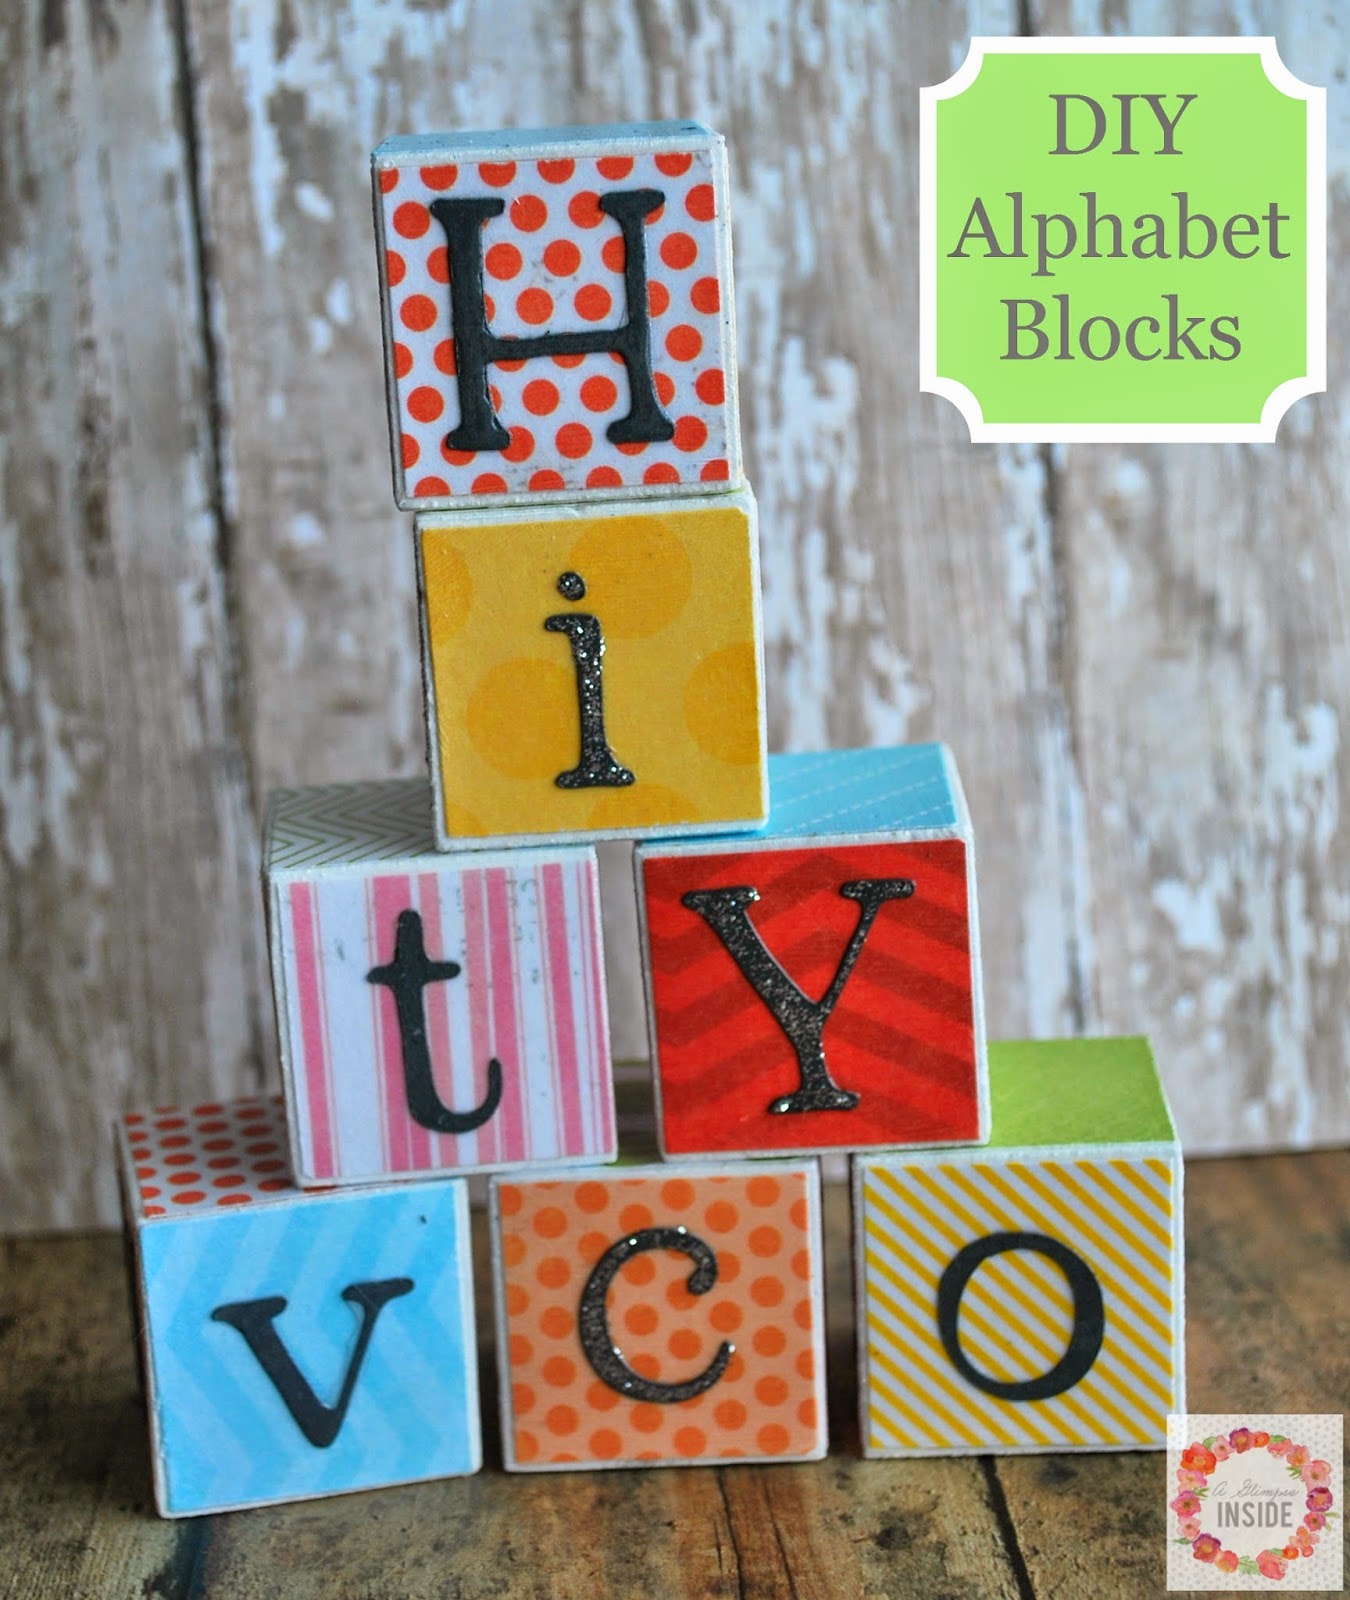 DIY Alphabet Blocks Tutorial • Mabey She Made It